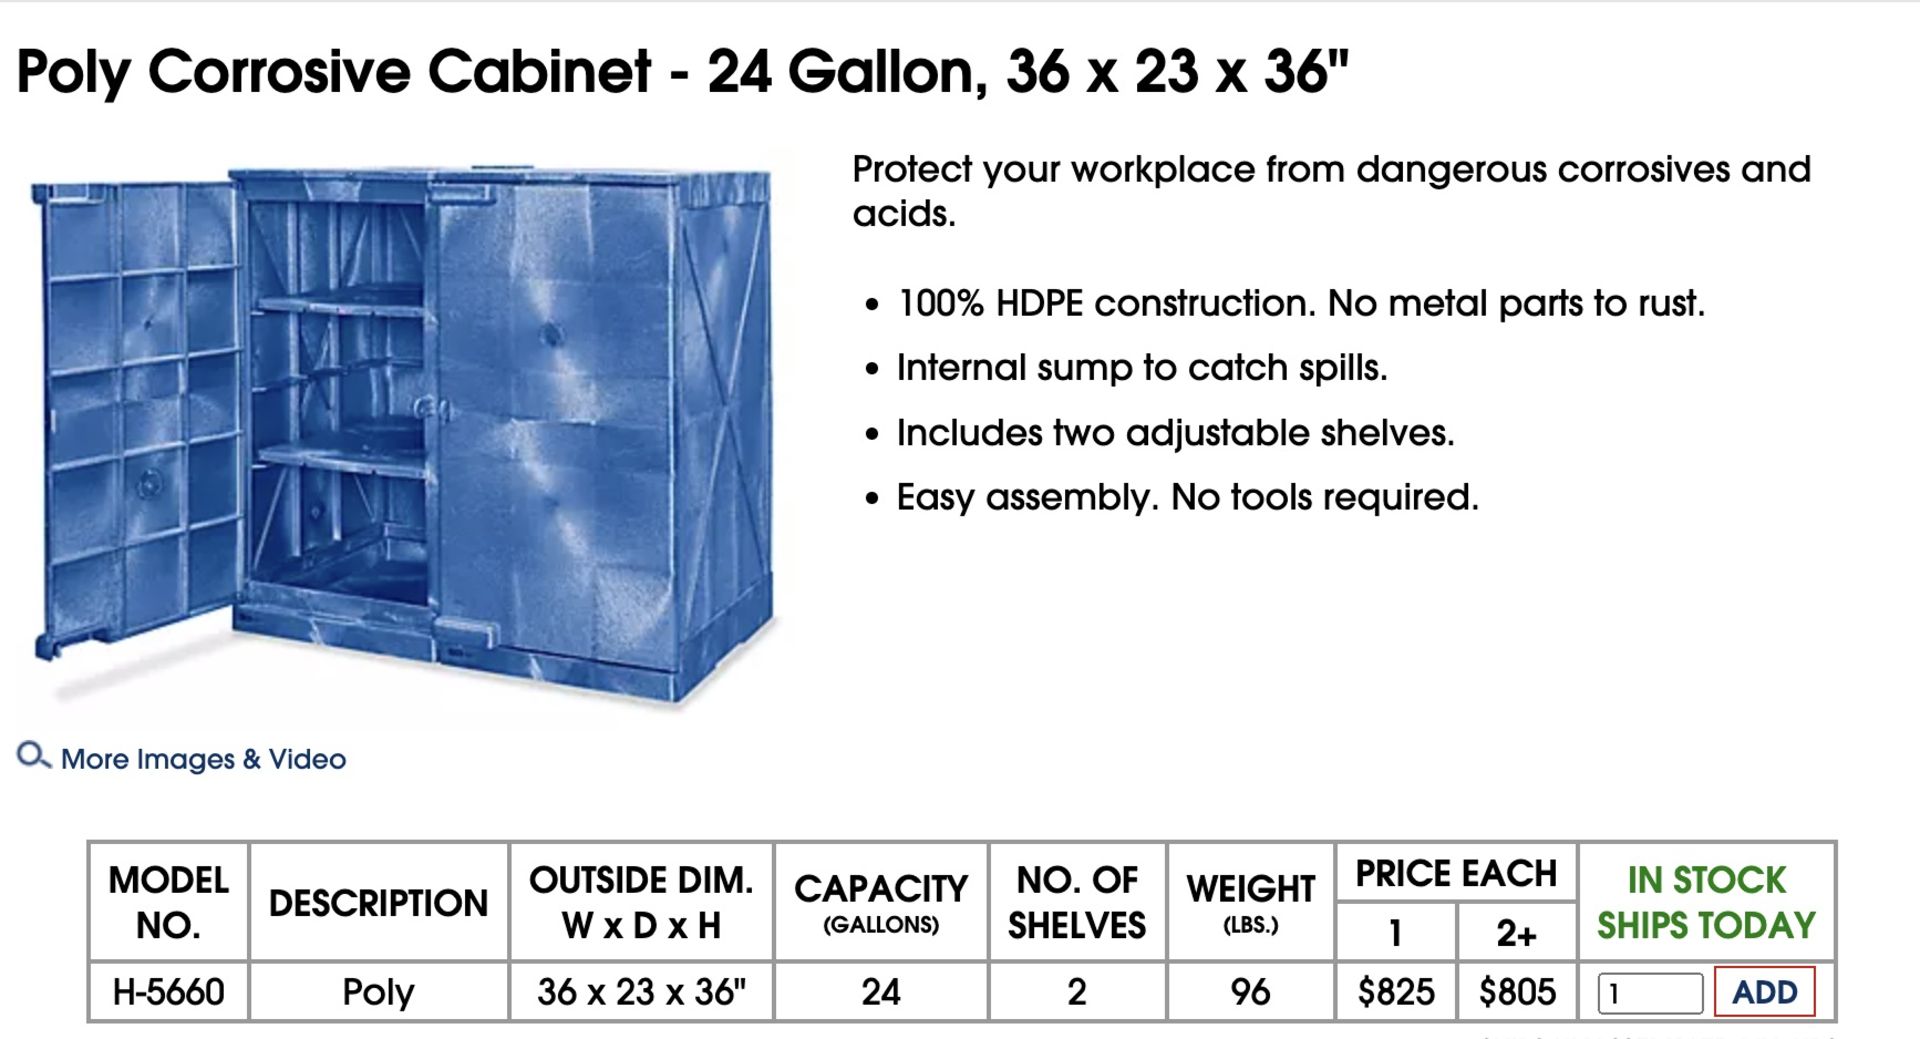 Corrosive Cabinet - Image 3 of 3